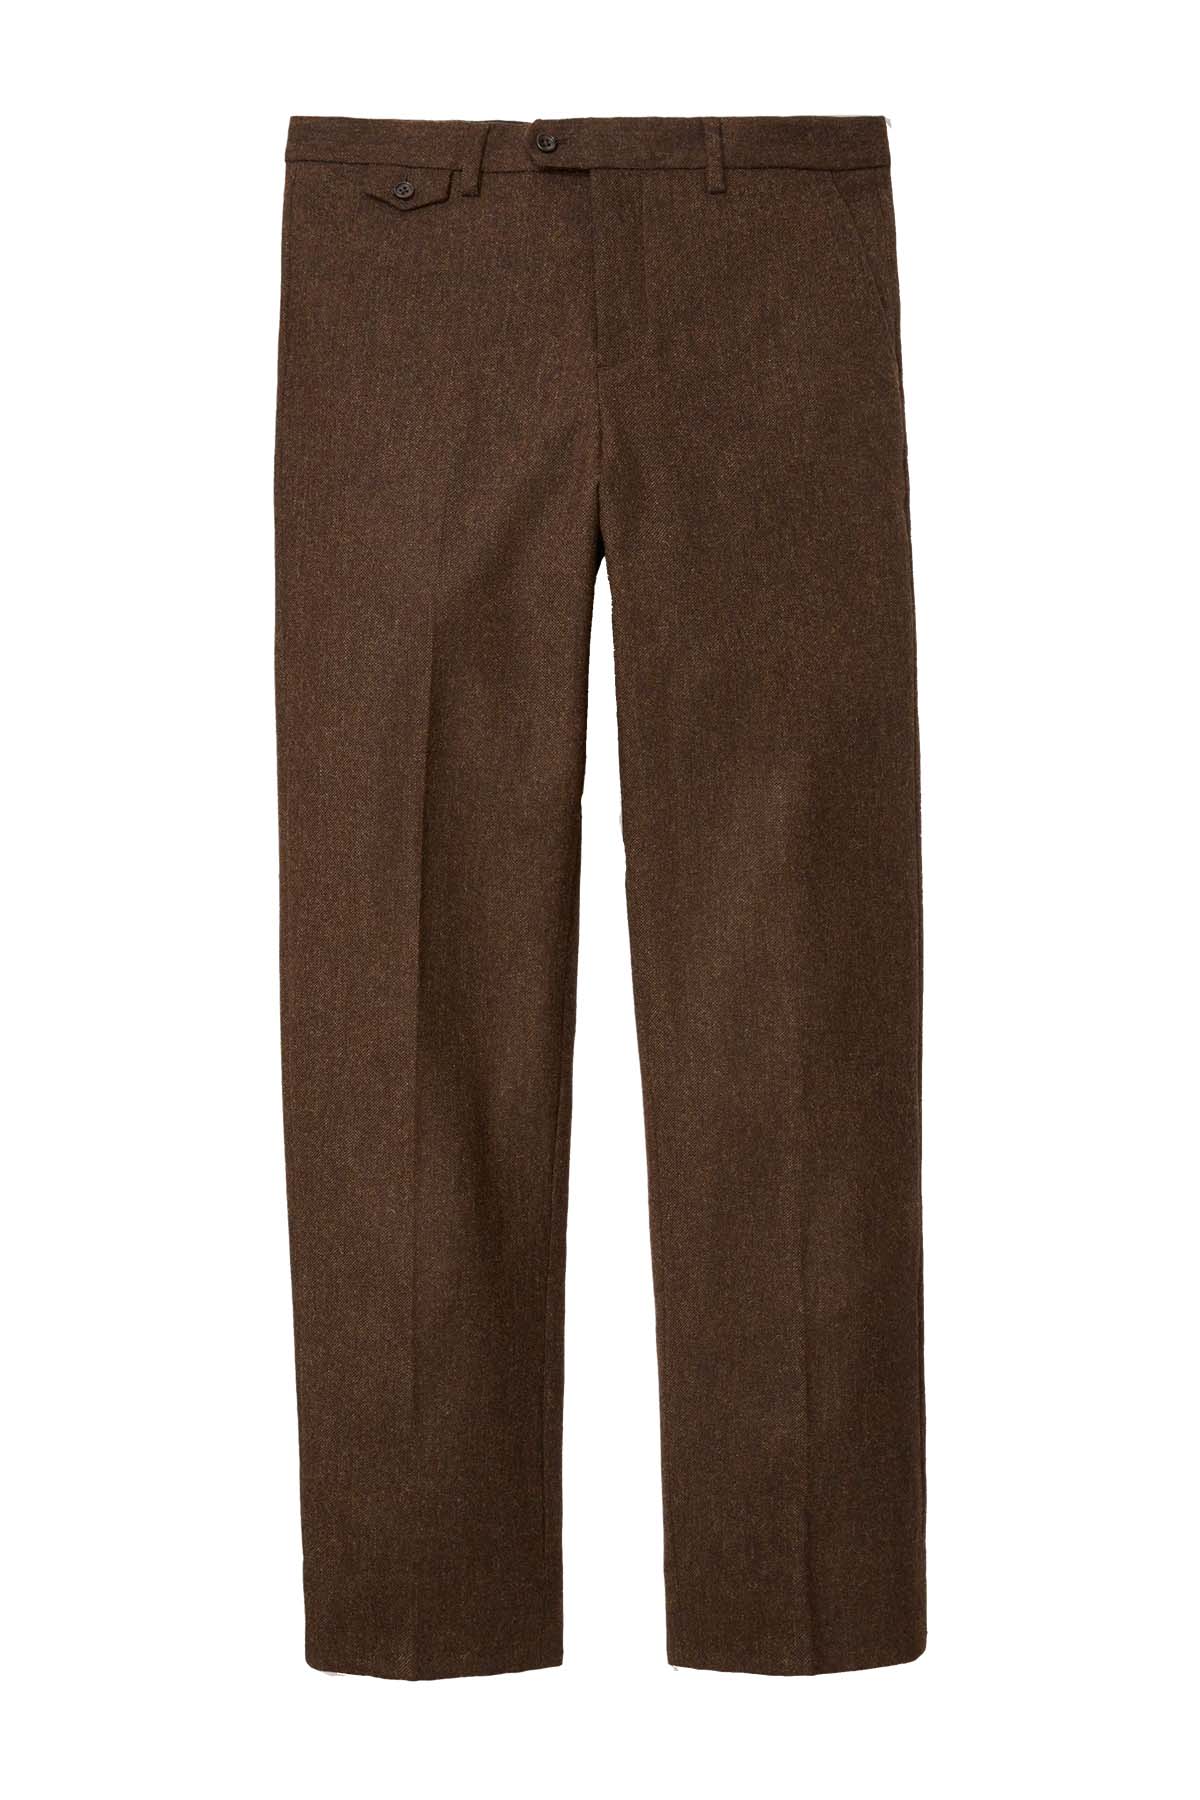 Bonobos - Jetsetter Fashion Pant - Brown Donegal Tweed